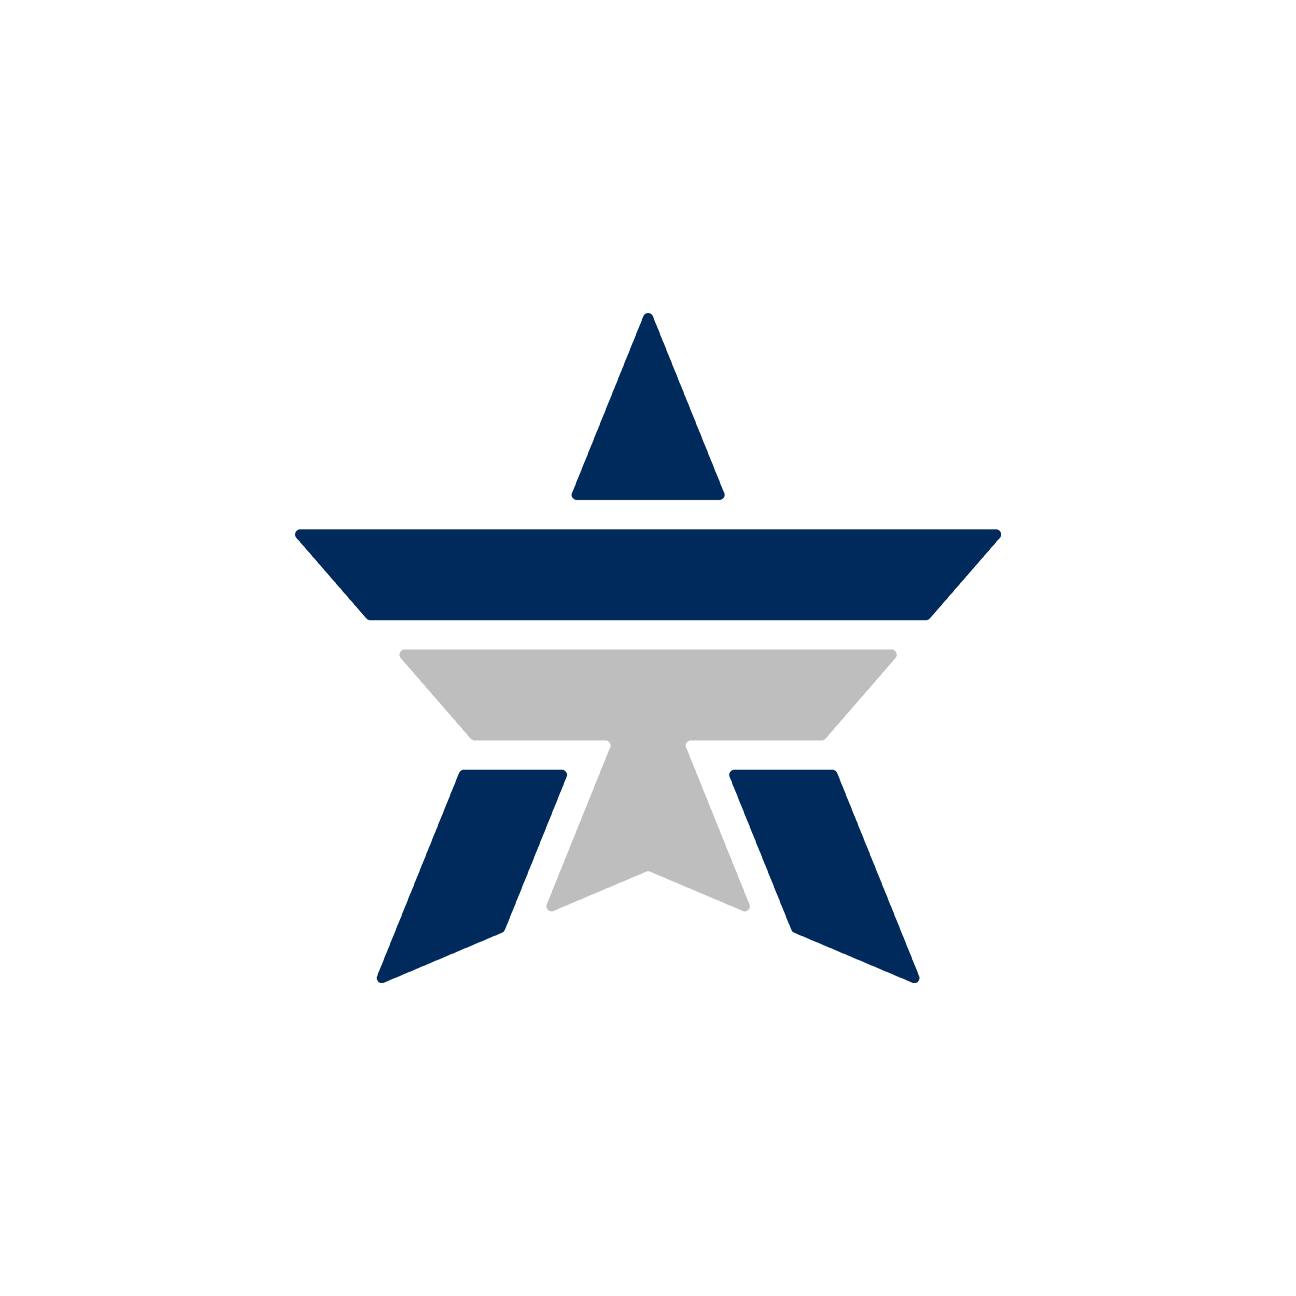 dallas cowboys logo for espn fantasy football